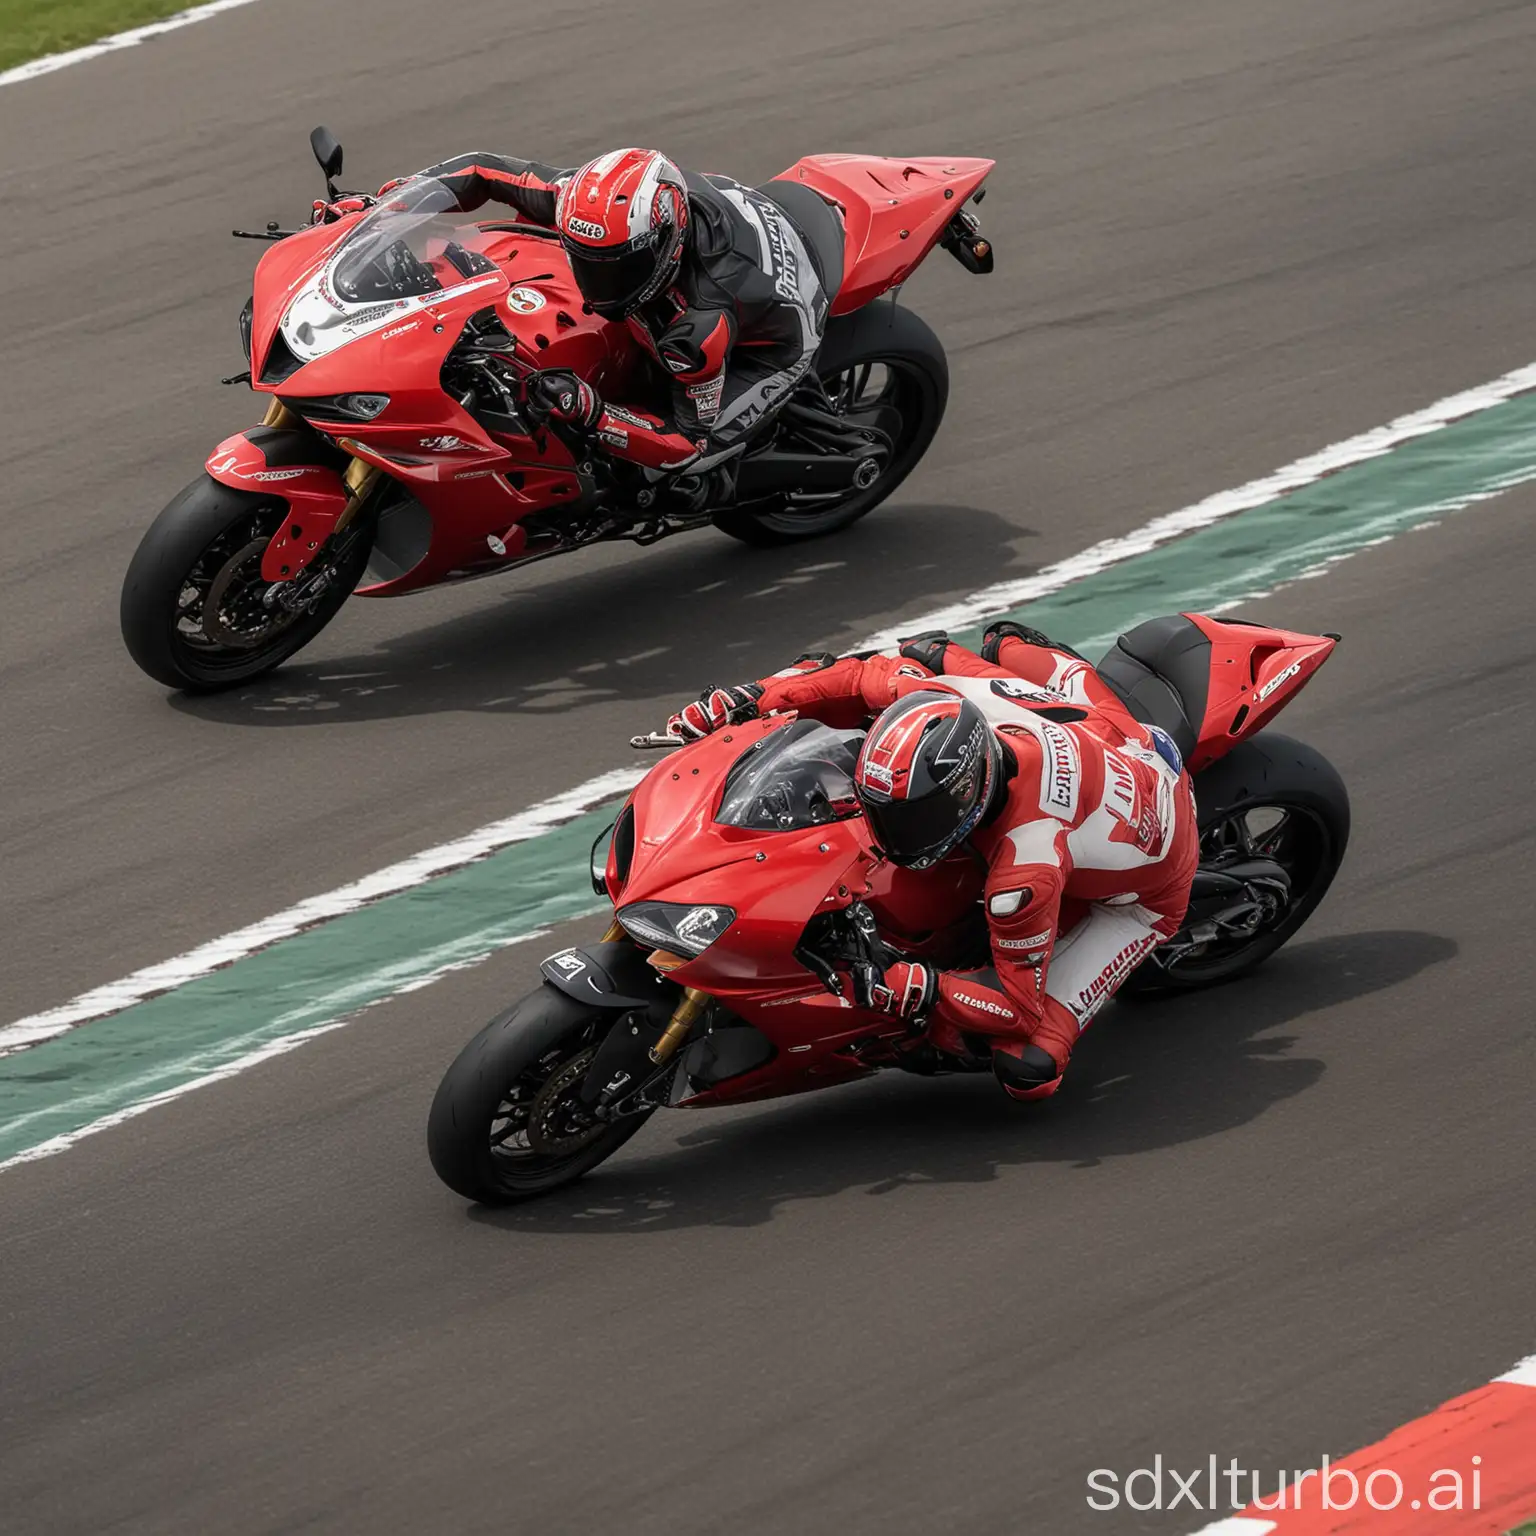 Black-Jaguar-Racing-alongside-Red-Ducati-Superbike-on-the-Racetrack